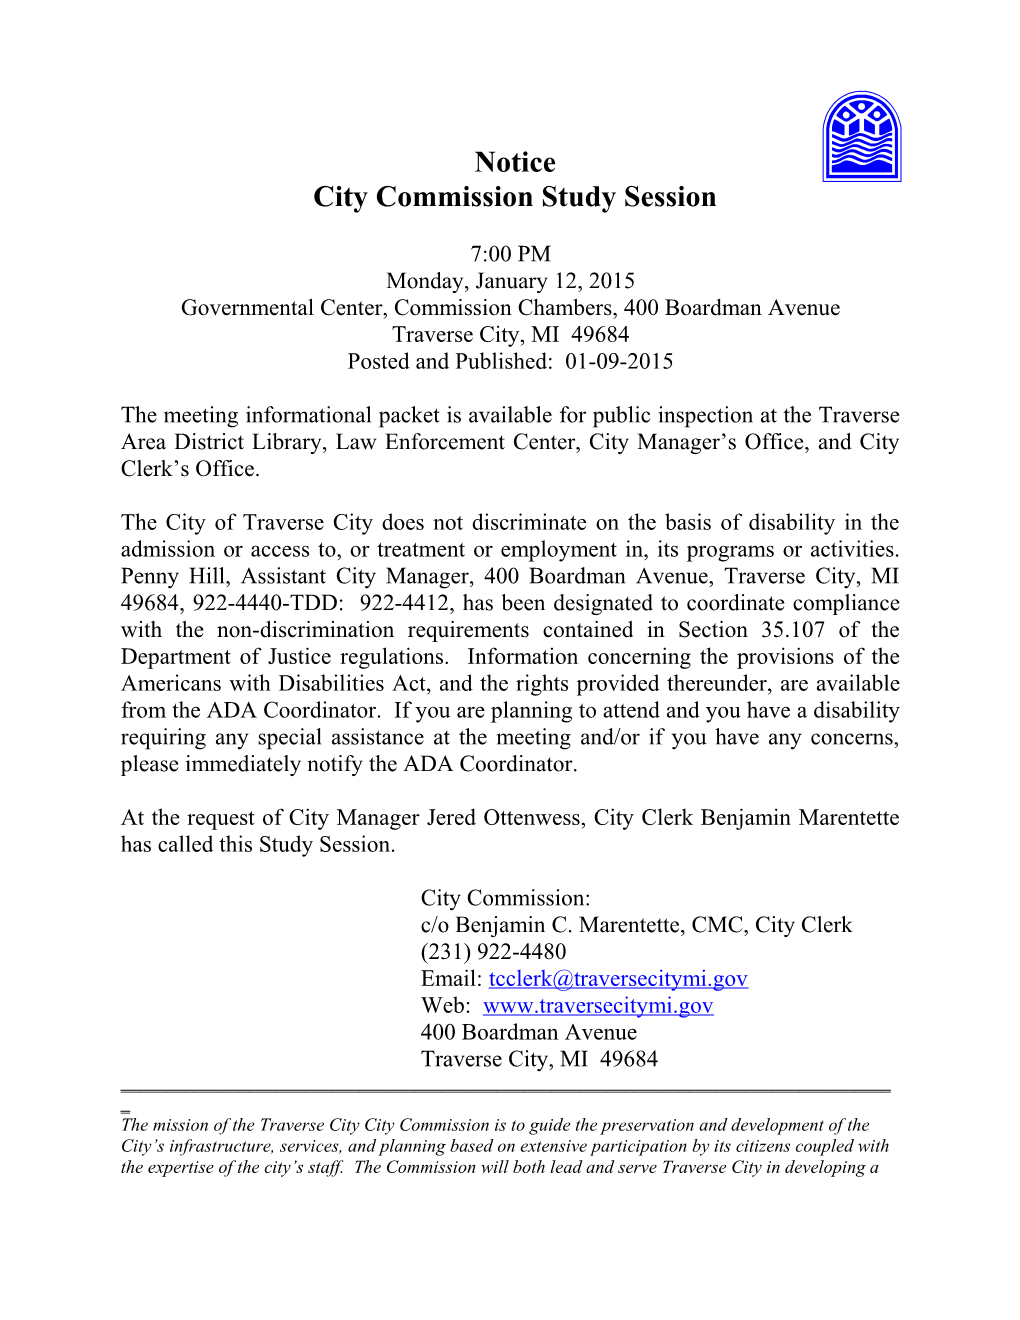 City Commission Study Session